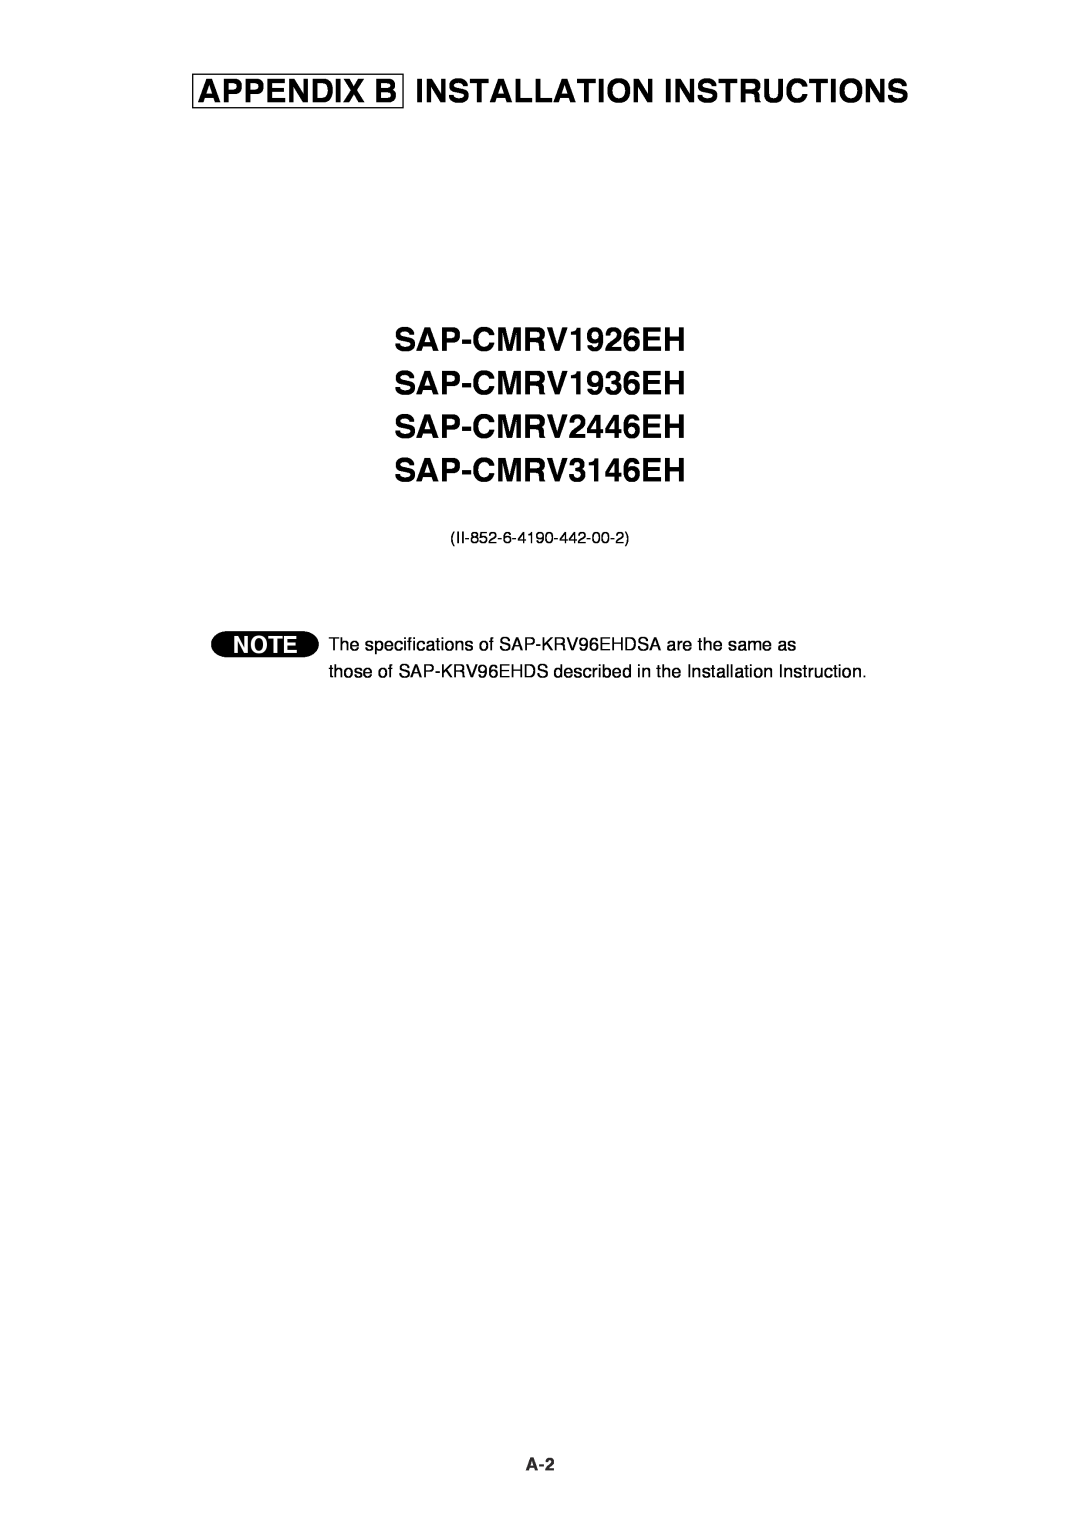 Sanyo SAP-CMRV1426EH-F Appendix B Installation Instructions, SAP-CMRV1926EH SAP-CMRV1936EH SAP-CMRV2446EH, SAP-CMRV3146EH 